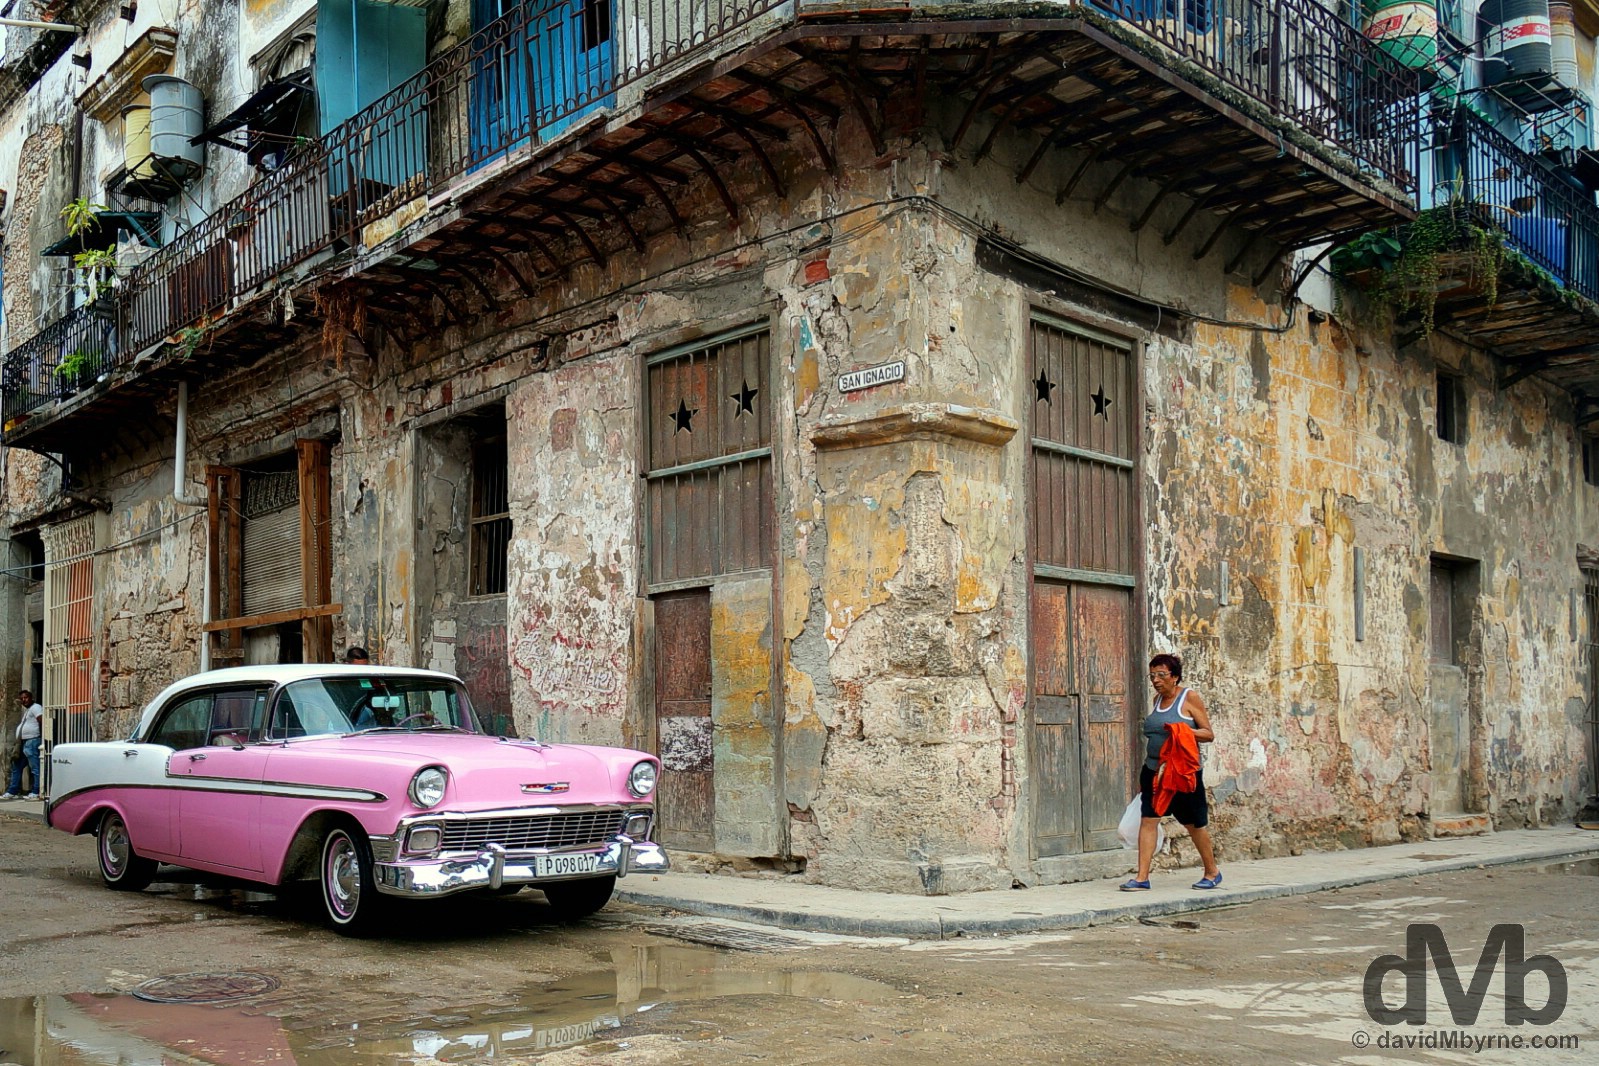 Over half a century of neglect. San Ignacio, Habana Vieja/Old Havana, Havana, Cuba. April 30, 2015. 